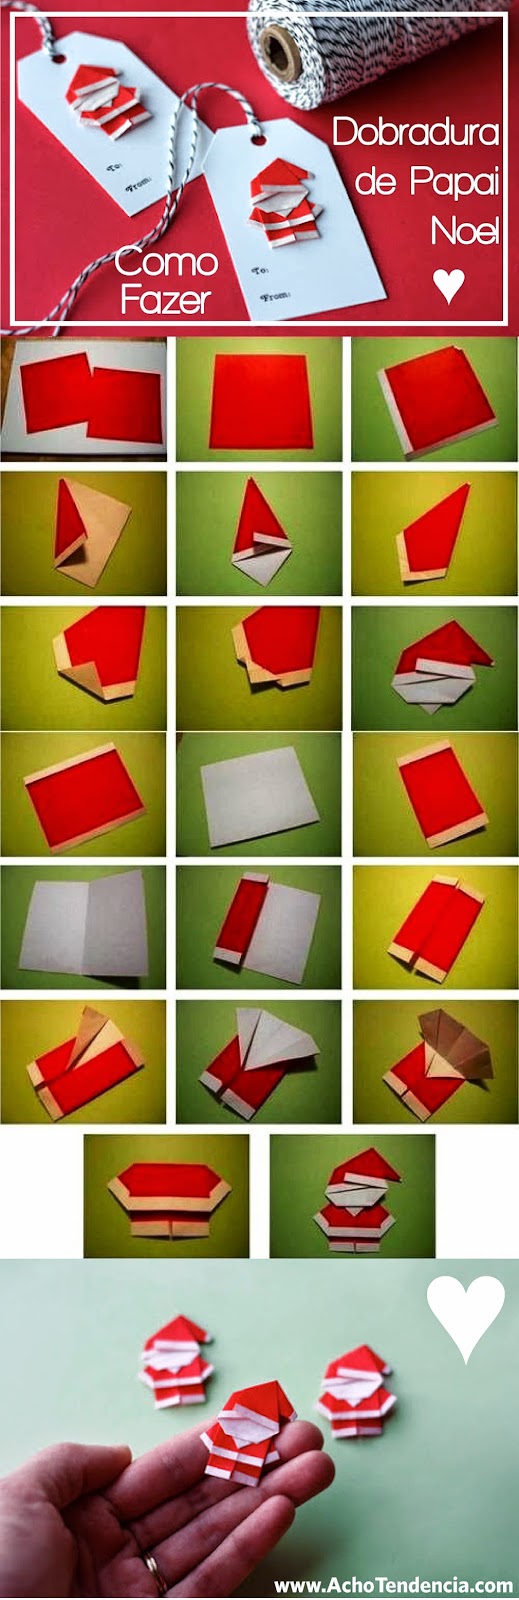 papai noel, origami, dobradura, como fazer, ideias, natal, diy